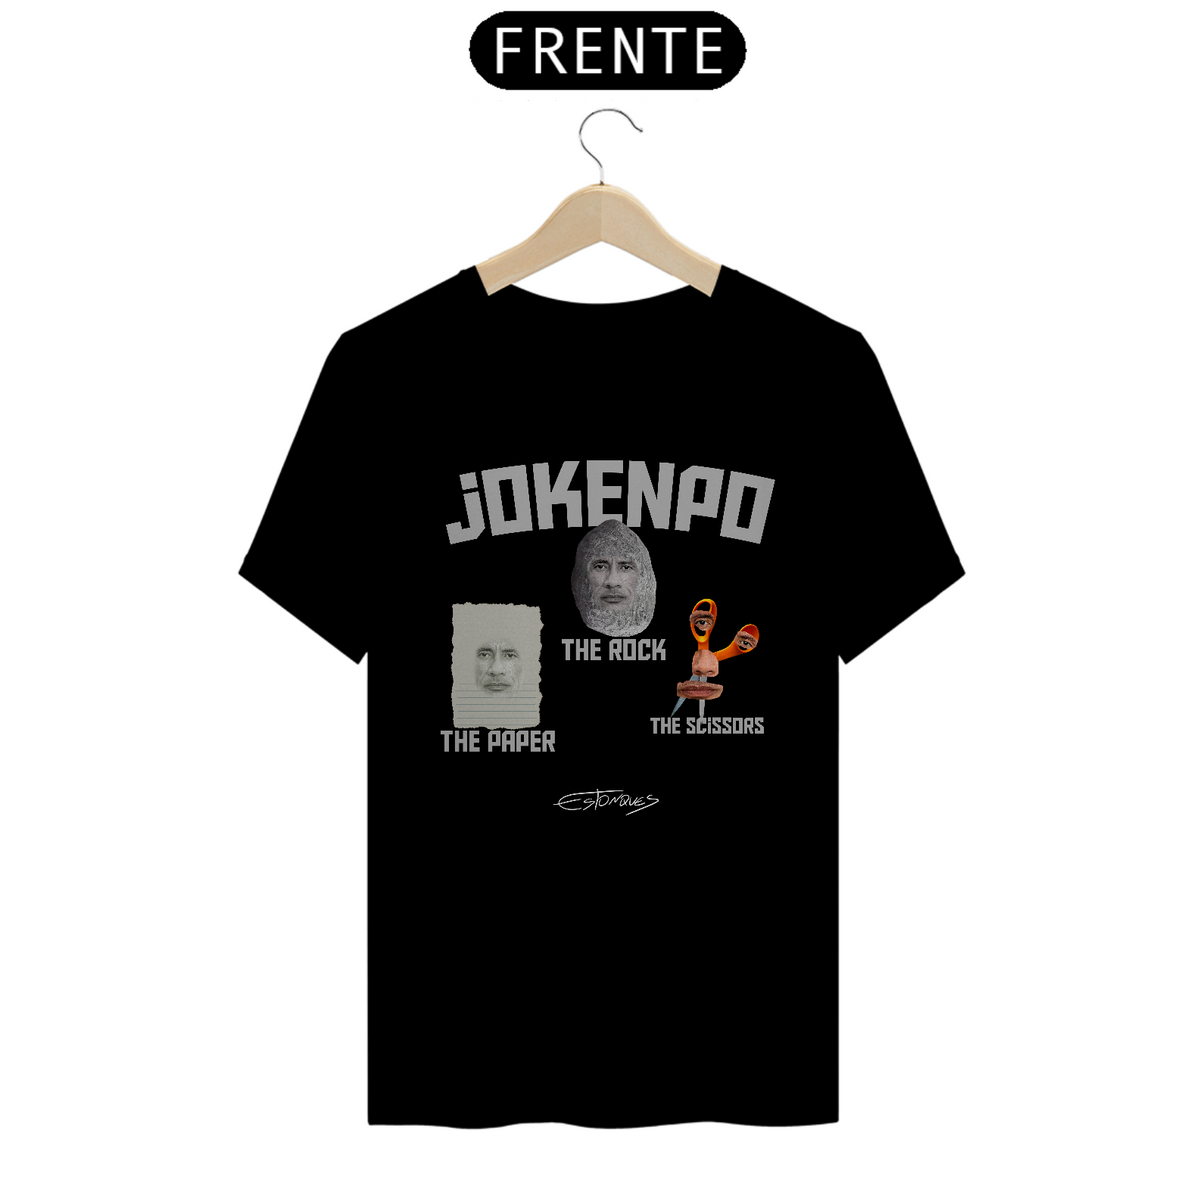 Nome do produto: Camiseta Jokenpo (The rock)